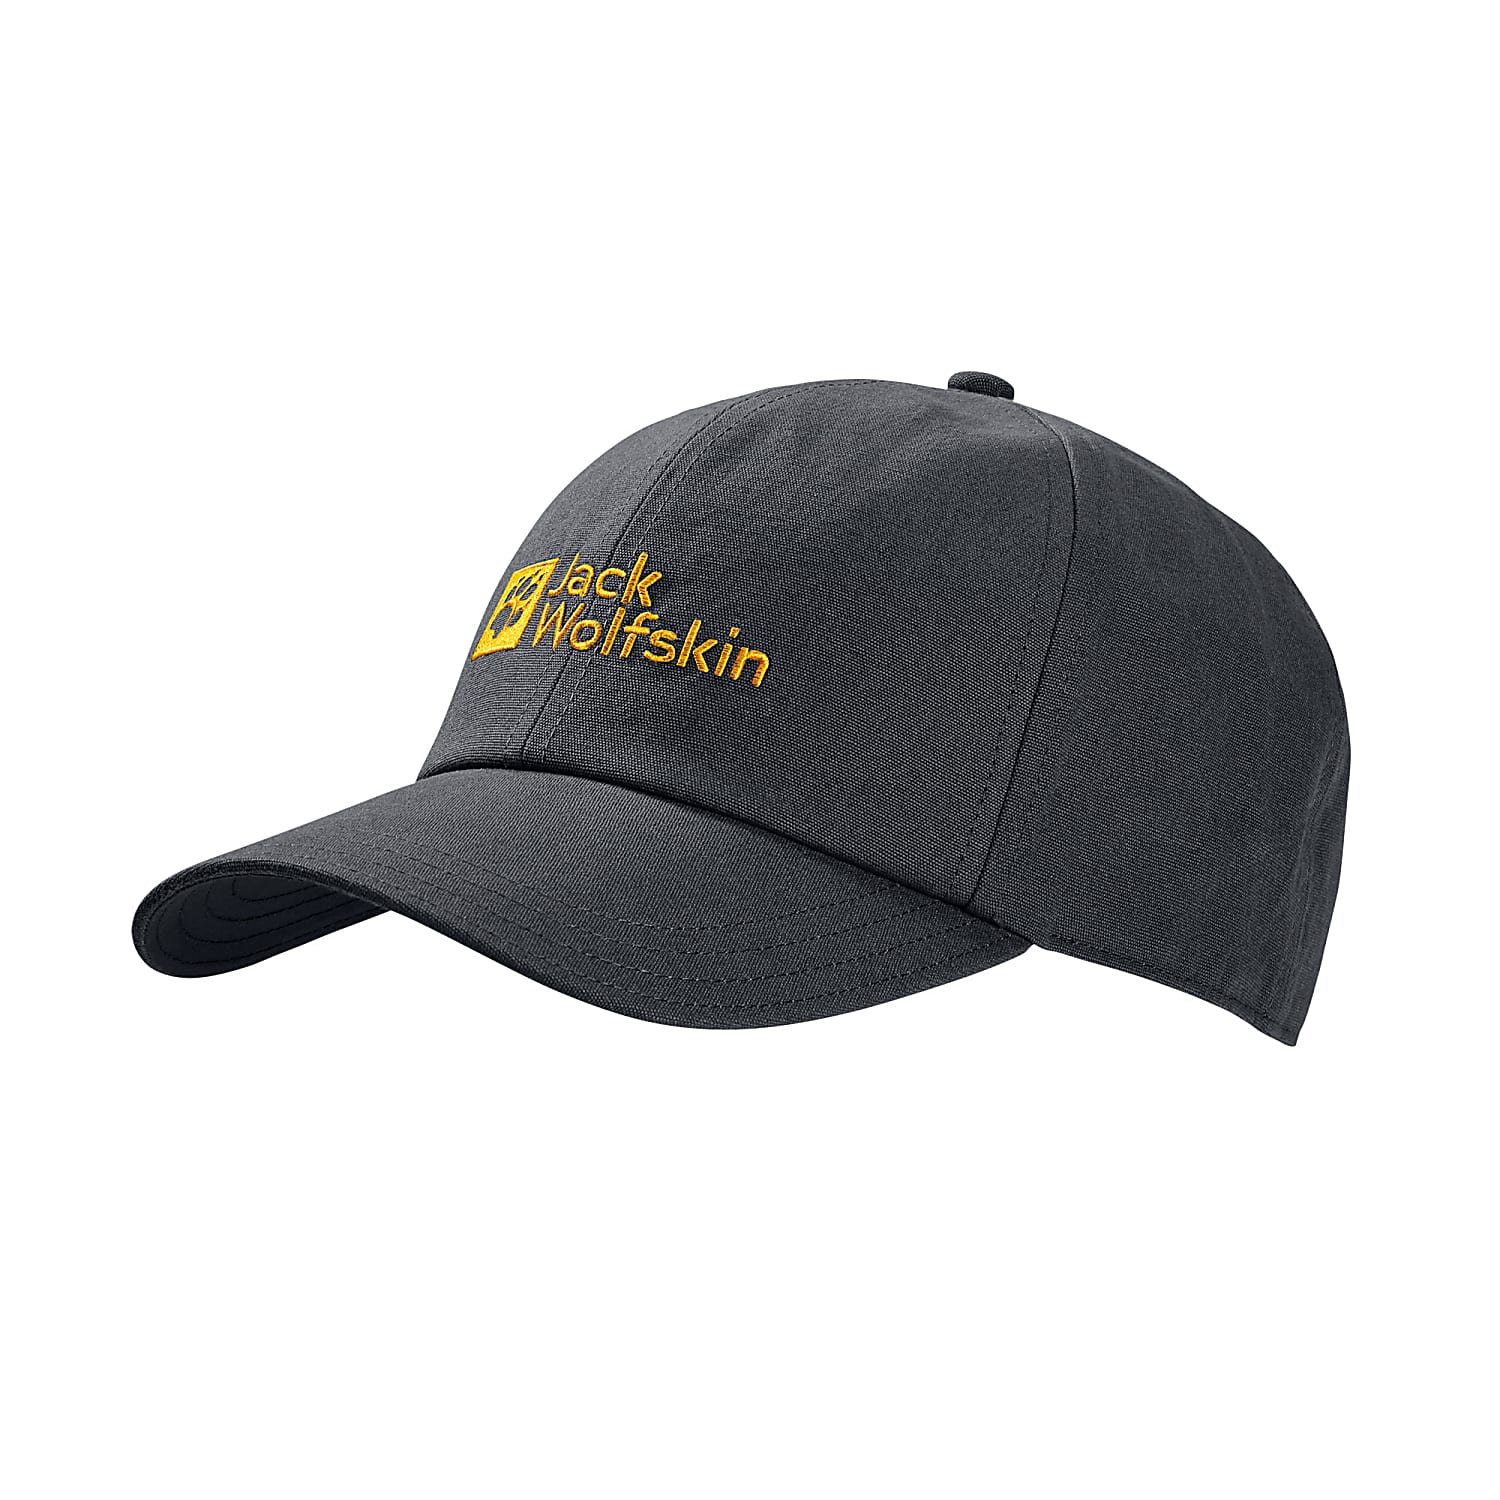 Jack Wolfskin BASEBALL CAP, Phantom - Fast and cheap shipping